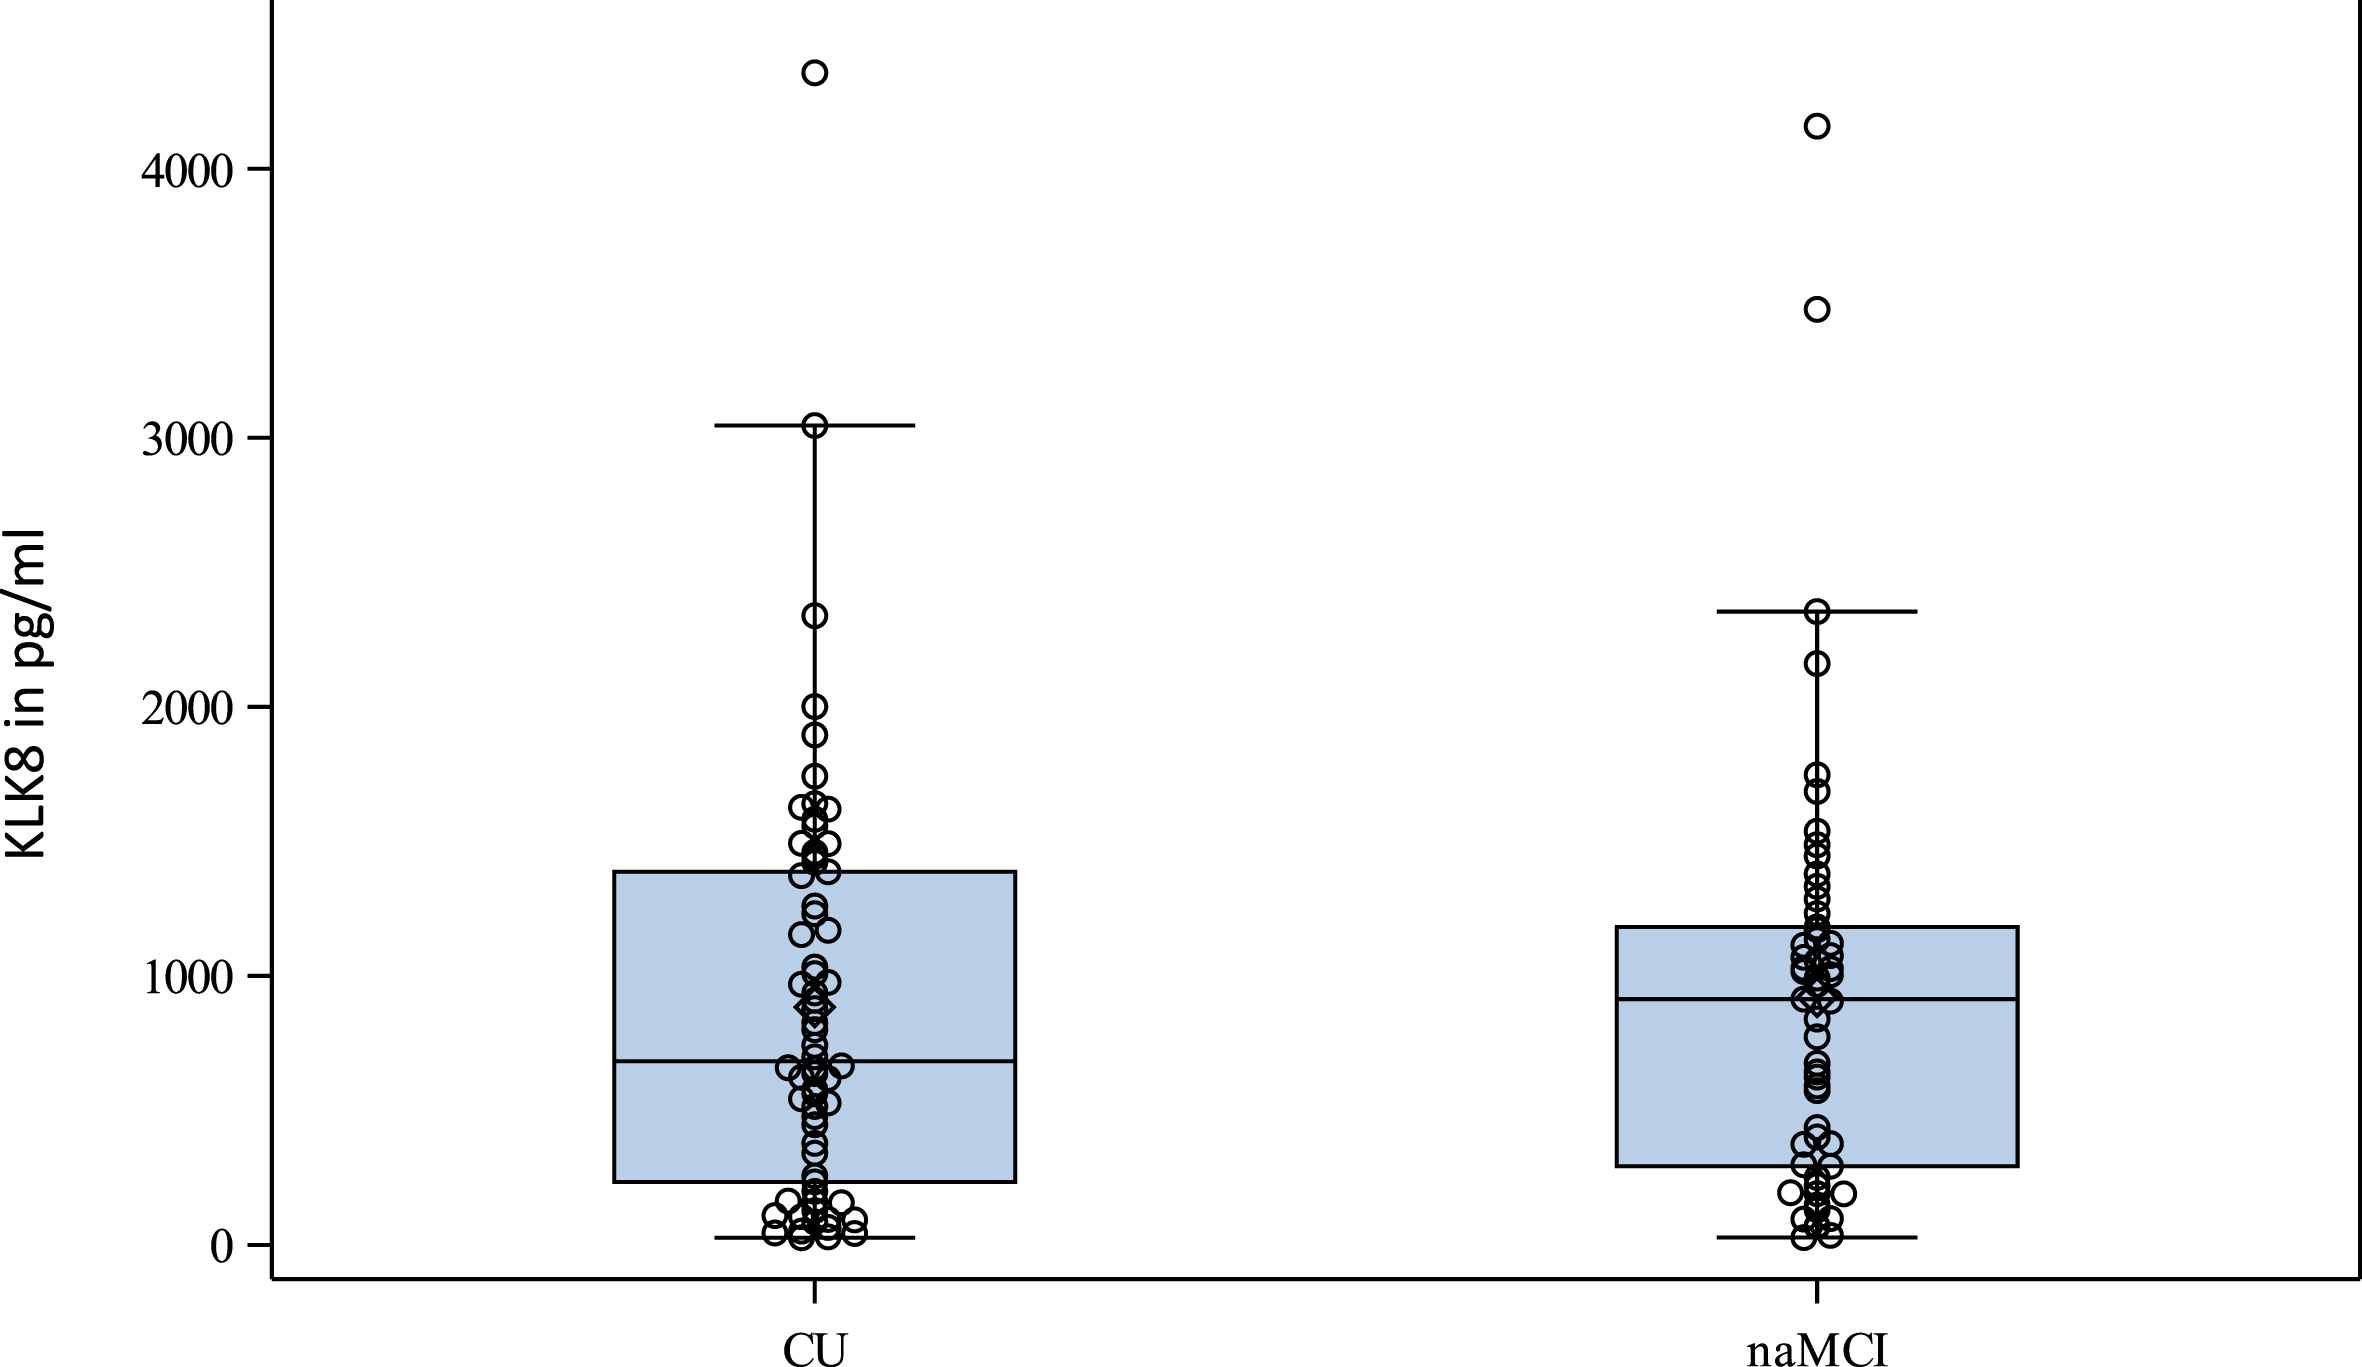 Distribution of KLK8 in pg/ml at T2 according to cognitive status. CU, cognitively unimpaired; KLK8, kallikrein-8; naMCI, non-amnestic mild cognitive impairment; T2, second follow-up visit.